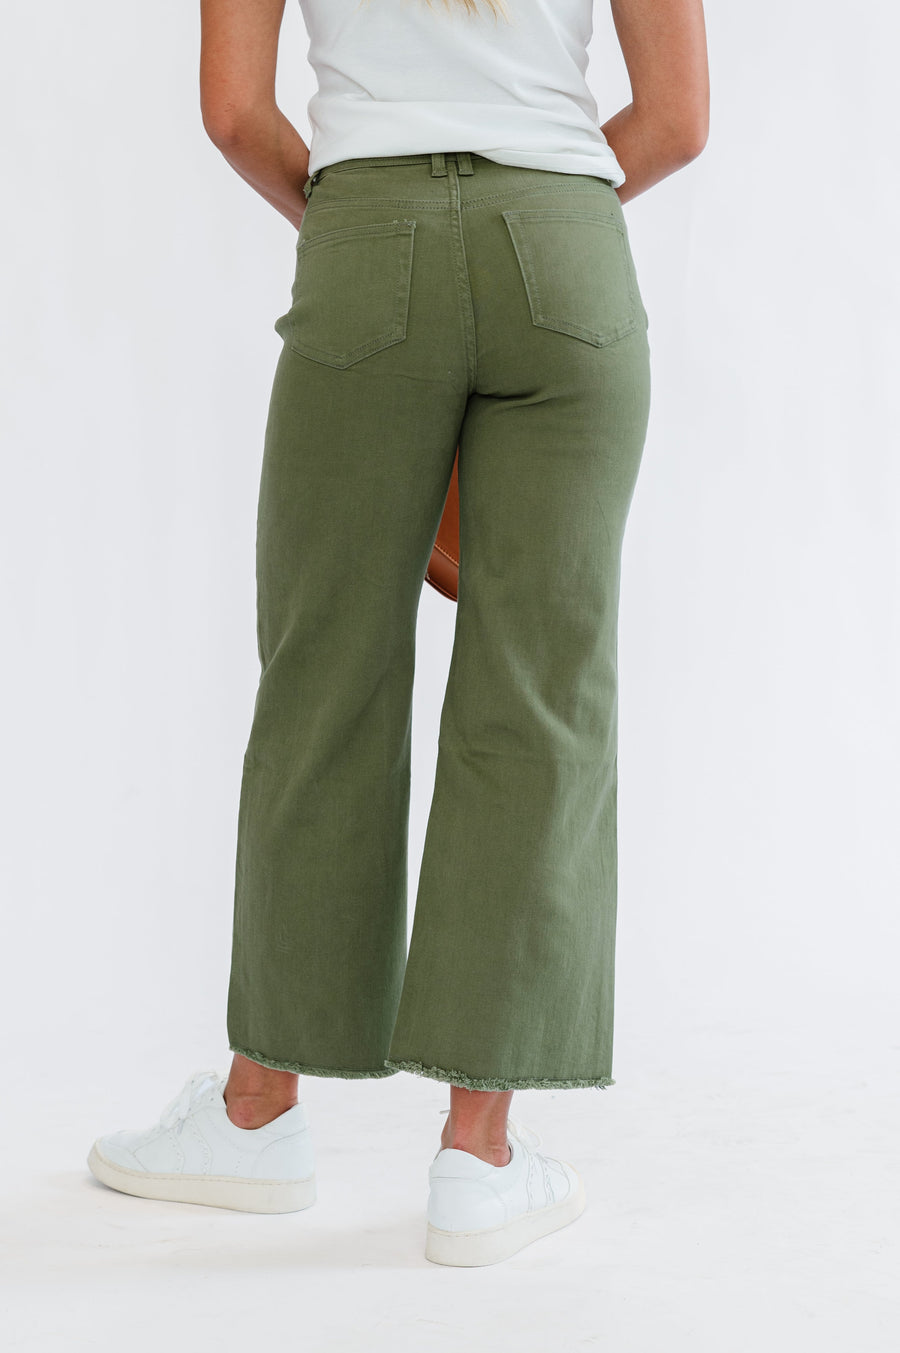 Fehrnvi olive green pants